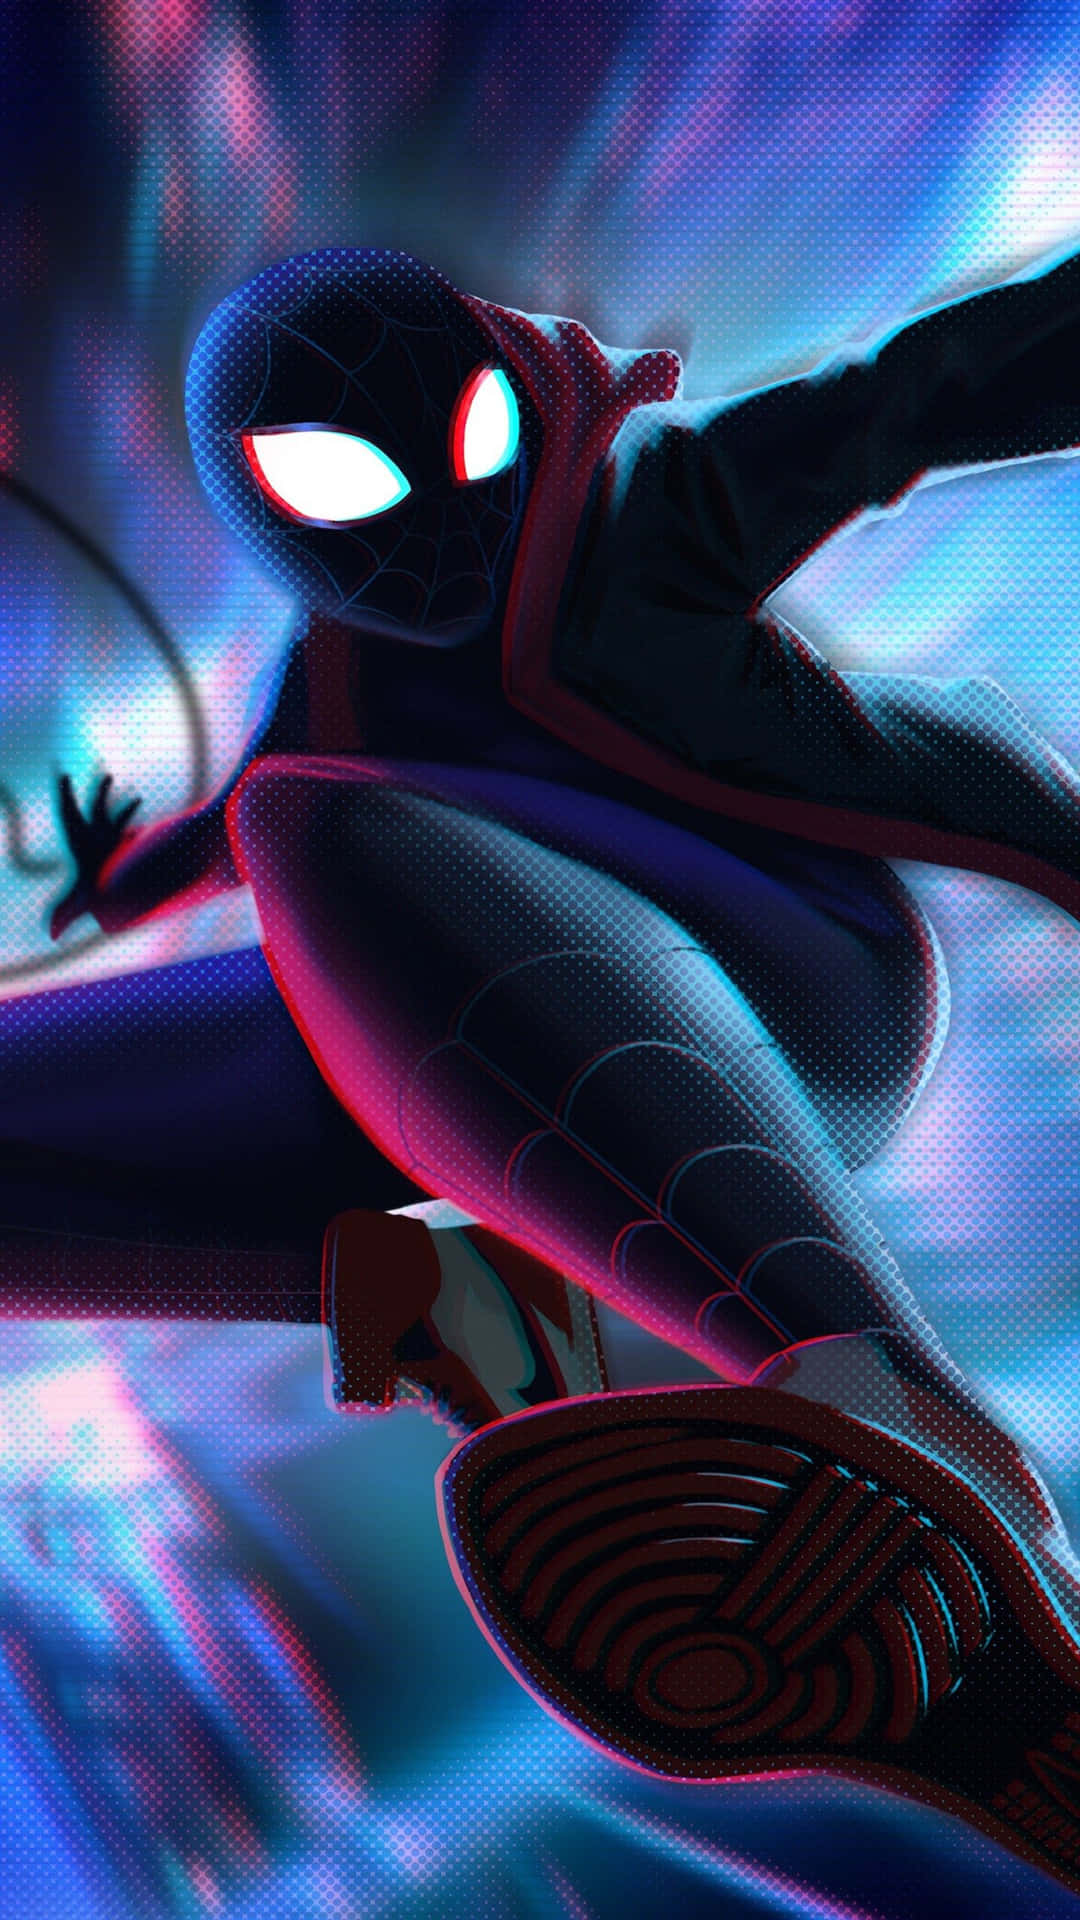 Blurred Black Suit Spider Man Miles Morales iPhone Wallpaper